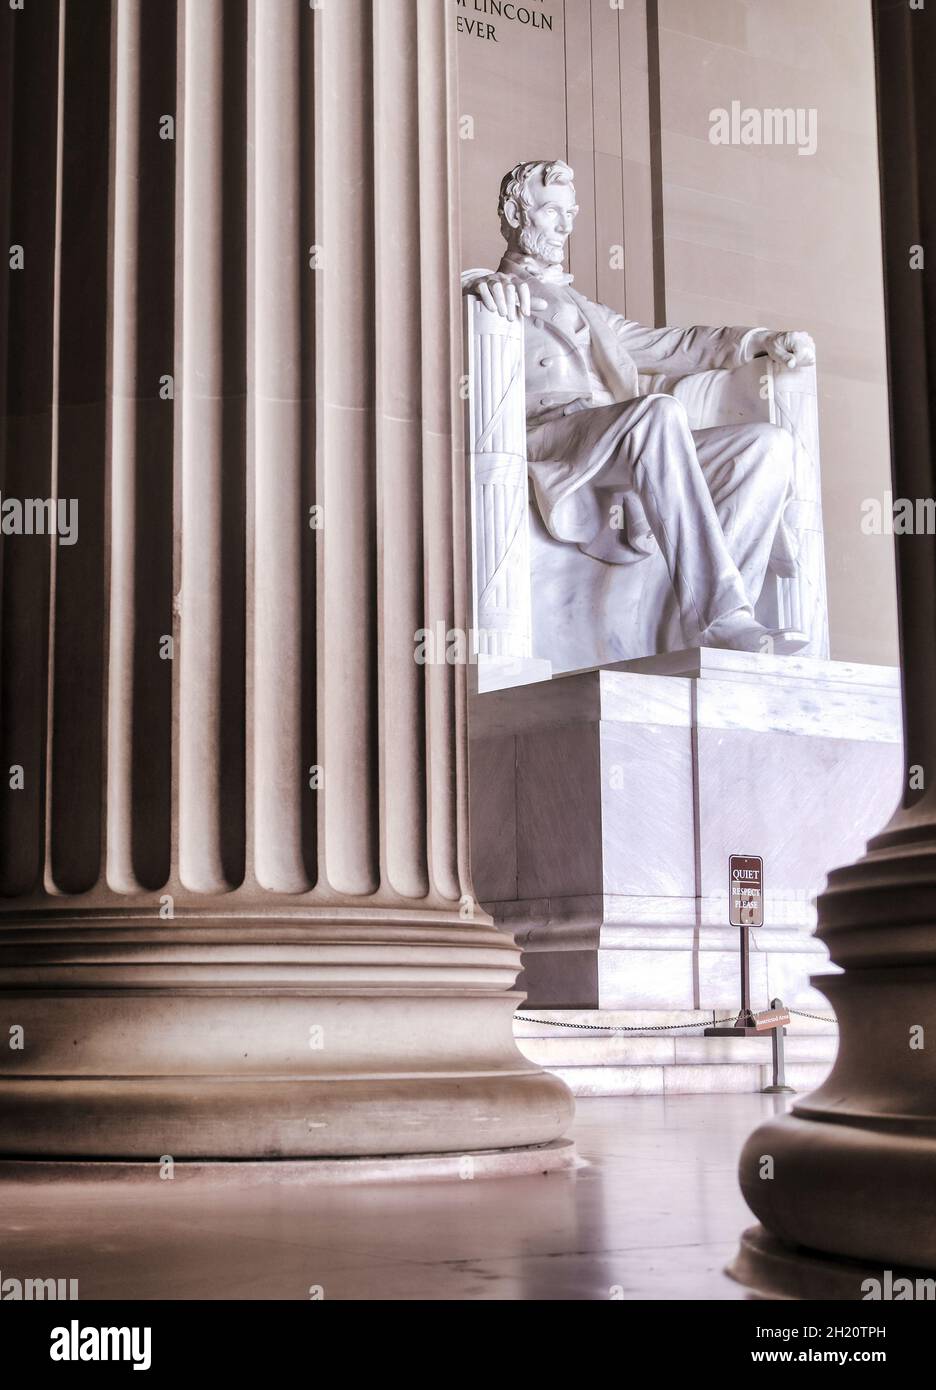 Das Lincoln Memorial in der National Mall in Washington, D.C. Stockfoto